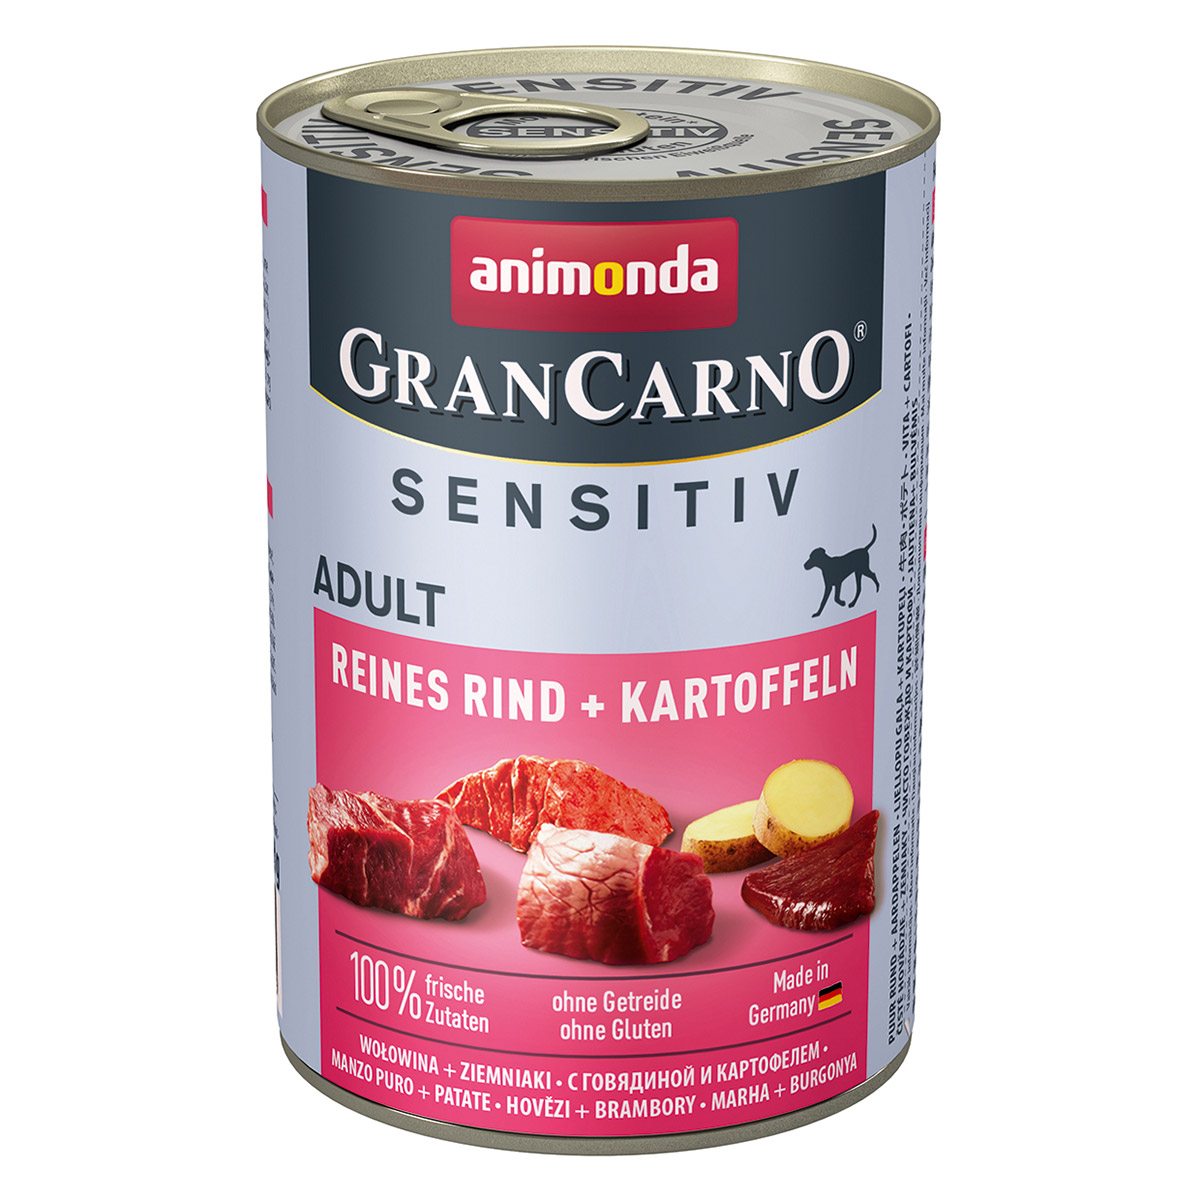 Animonda GranCarno Sensitiv čisté hovězí maso s bramborami 6x400g